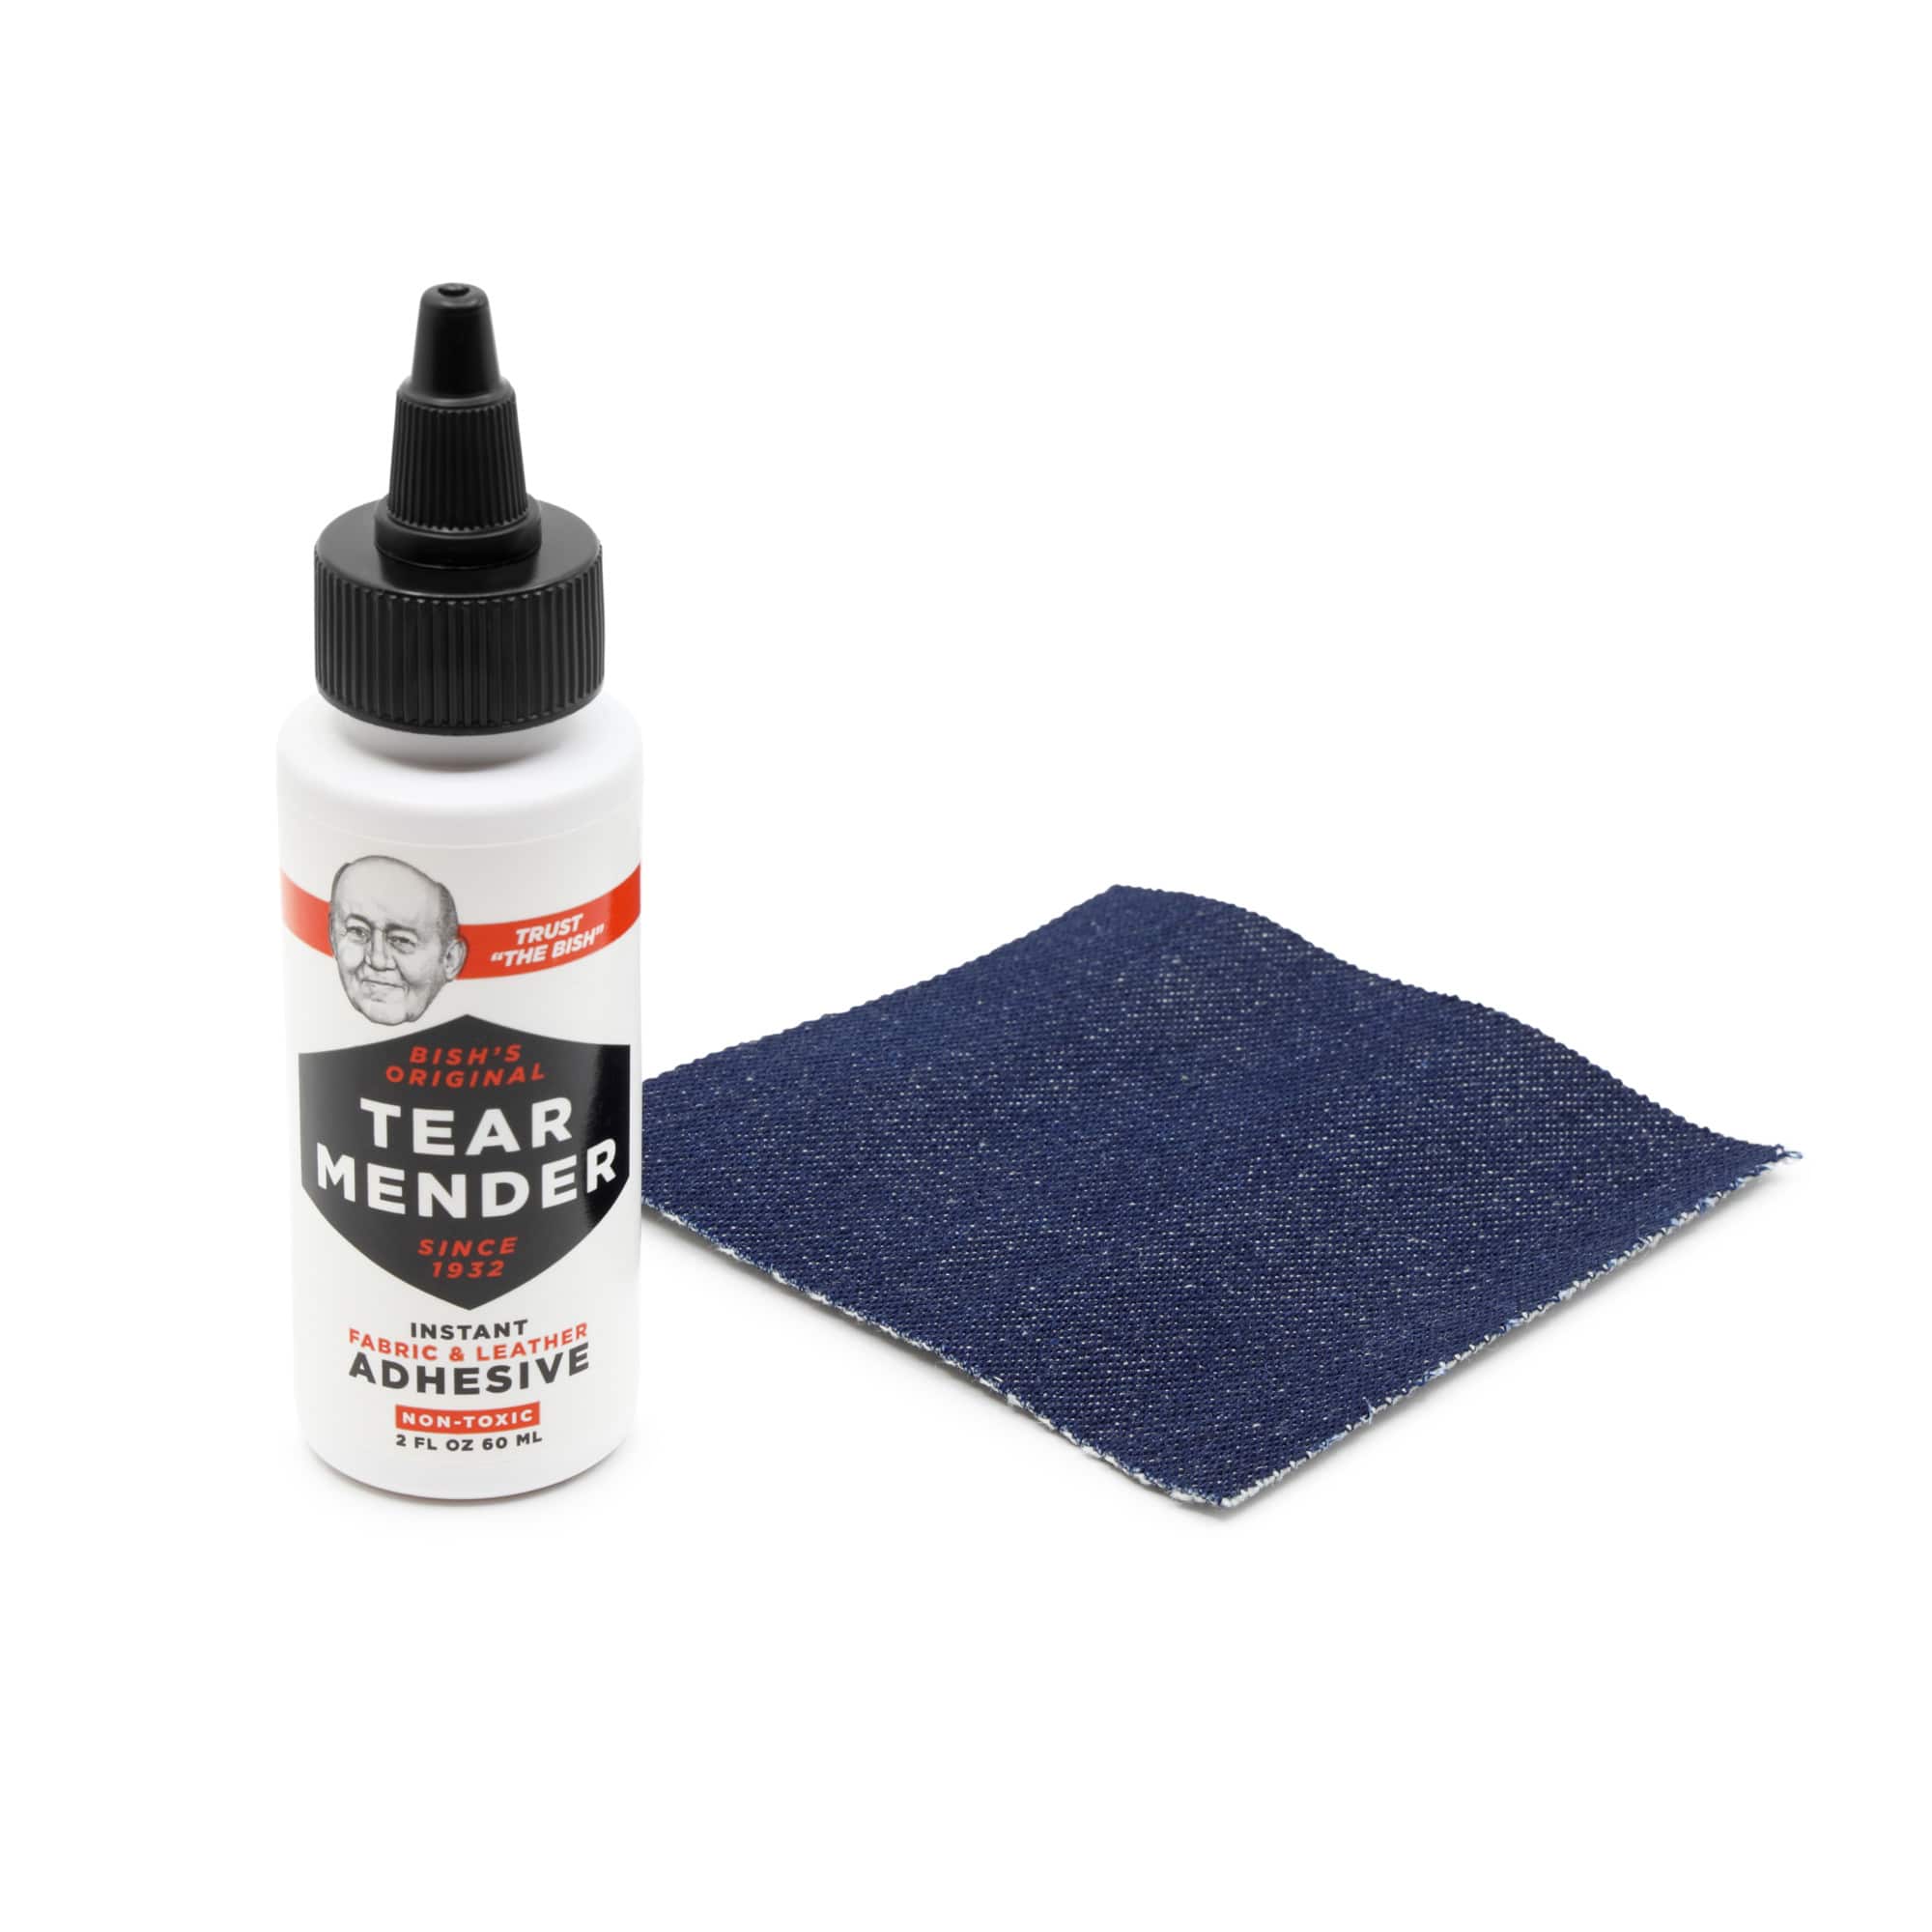 Tear Mender TG-6H Bish's Original Tear Mender Instant Fabric and Leather  Adhesive, 6 oz Bottle 2-Pack